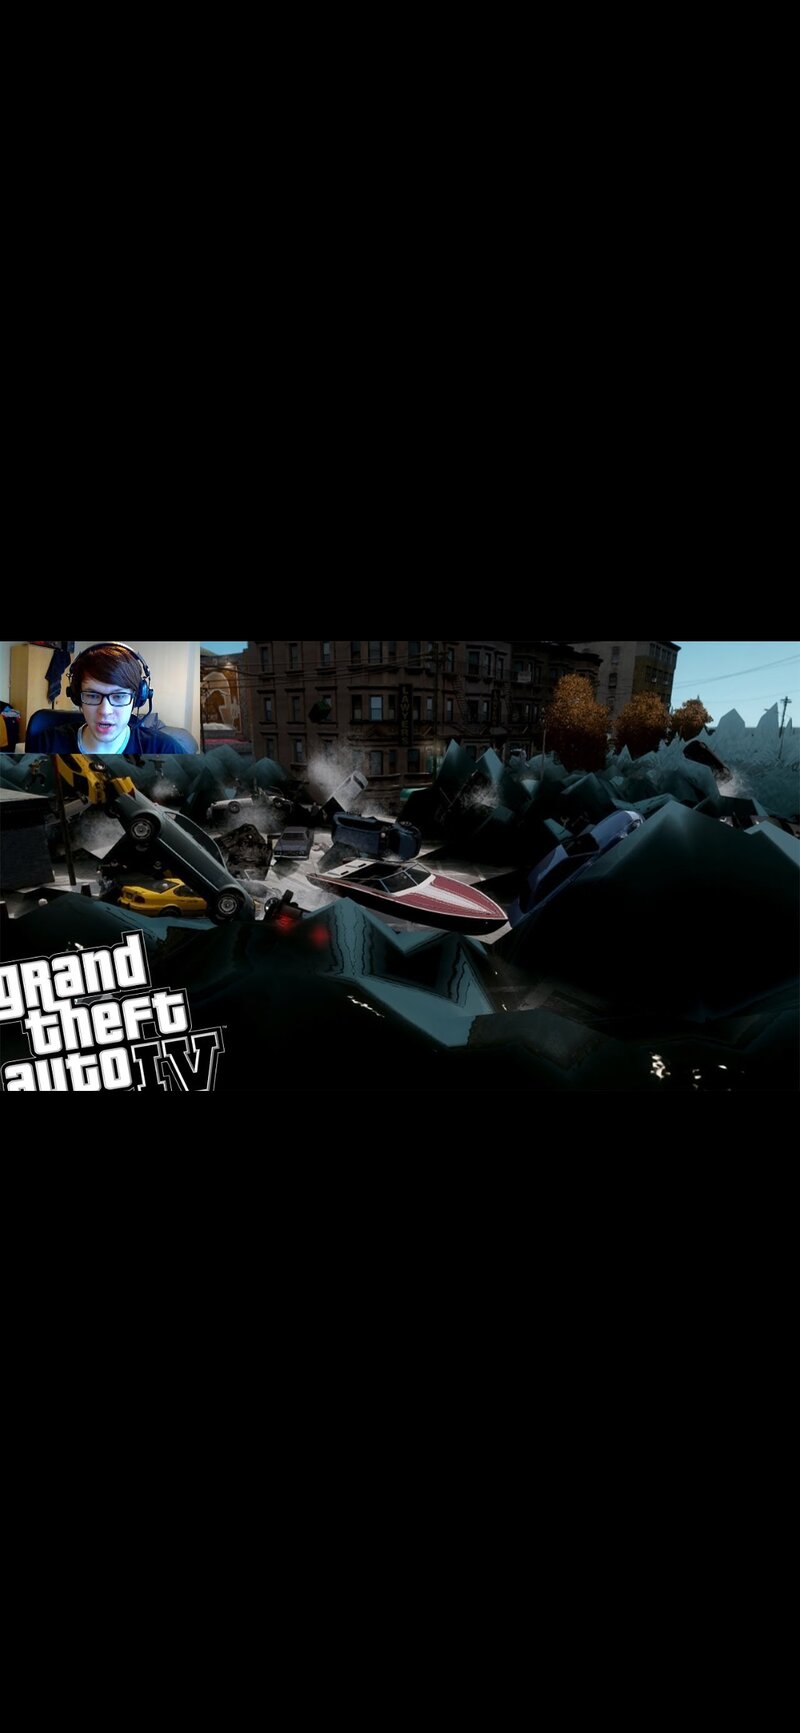 GTA 4: Carmageddon Mod! - (Funny Moments w/ Mods) 